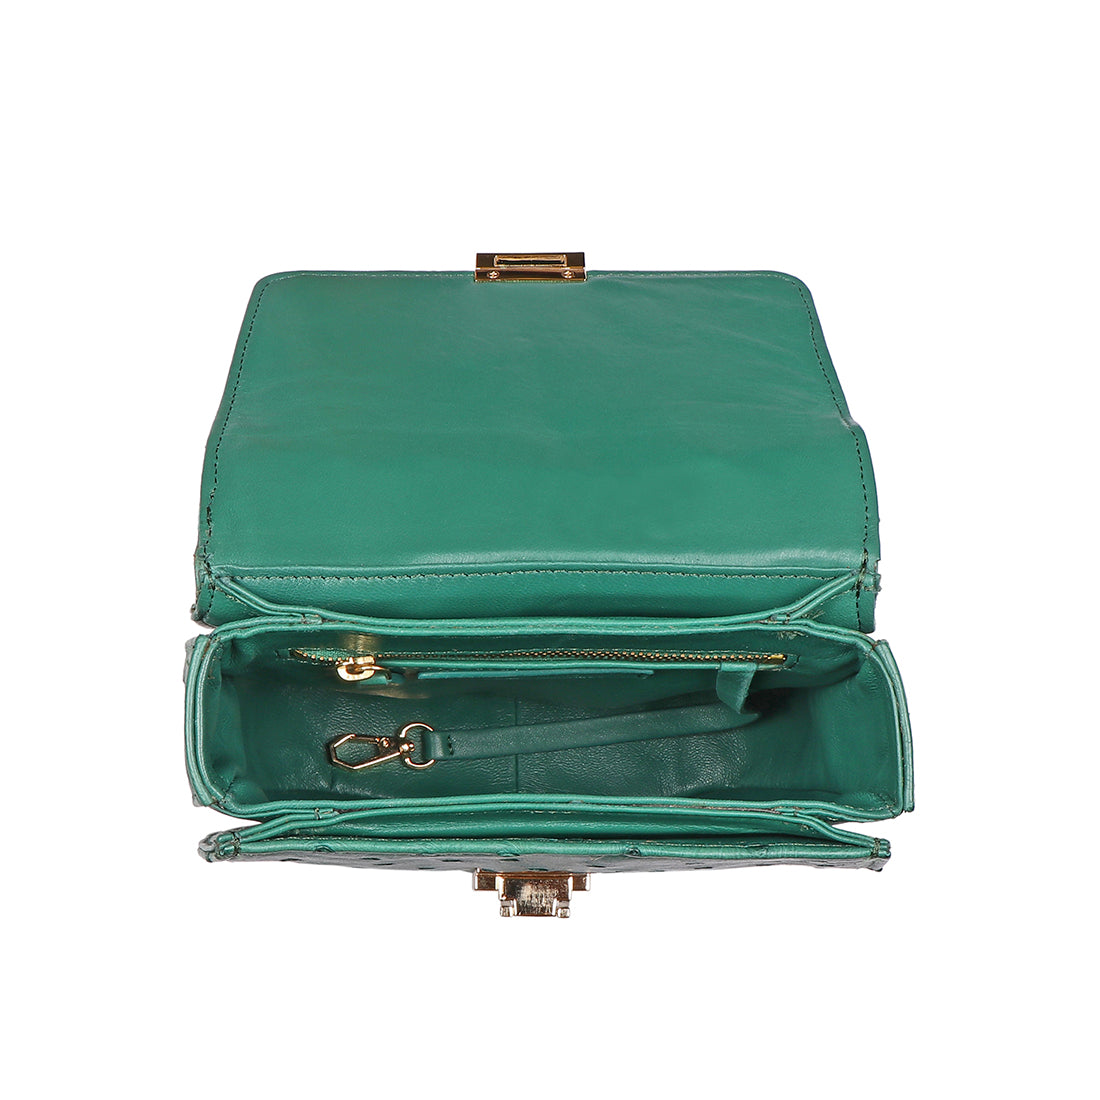 Buy Green Eda 02 Sling Bag Online - Hidesign